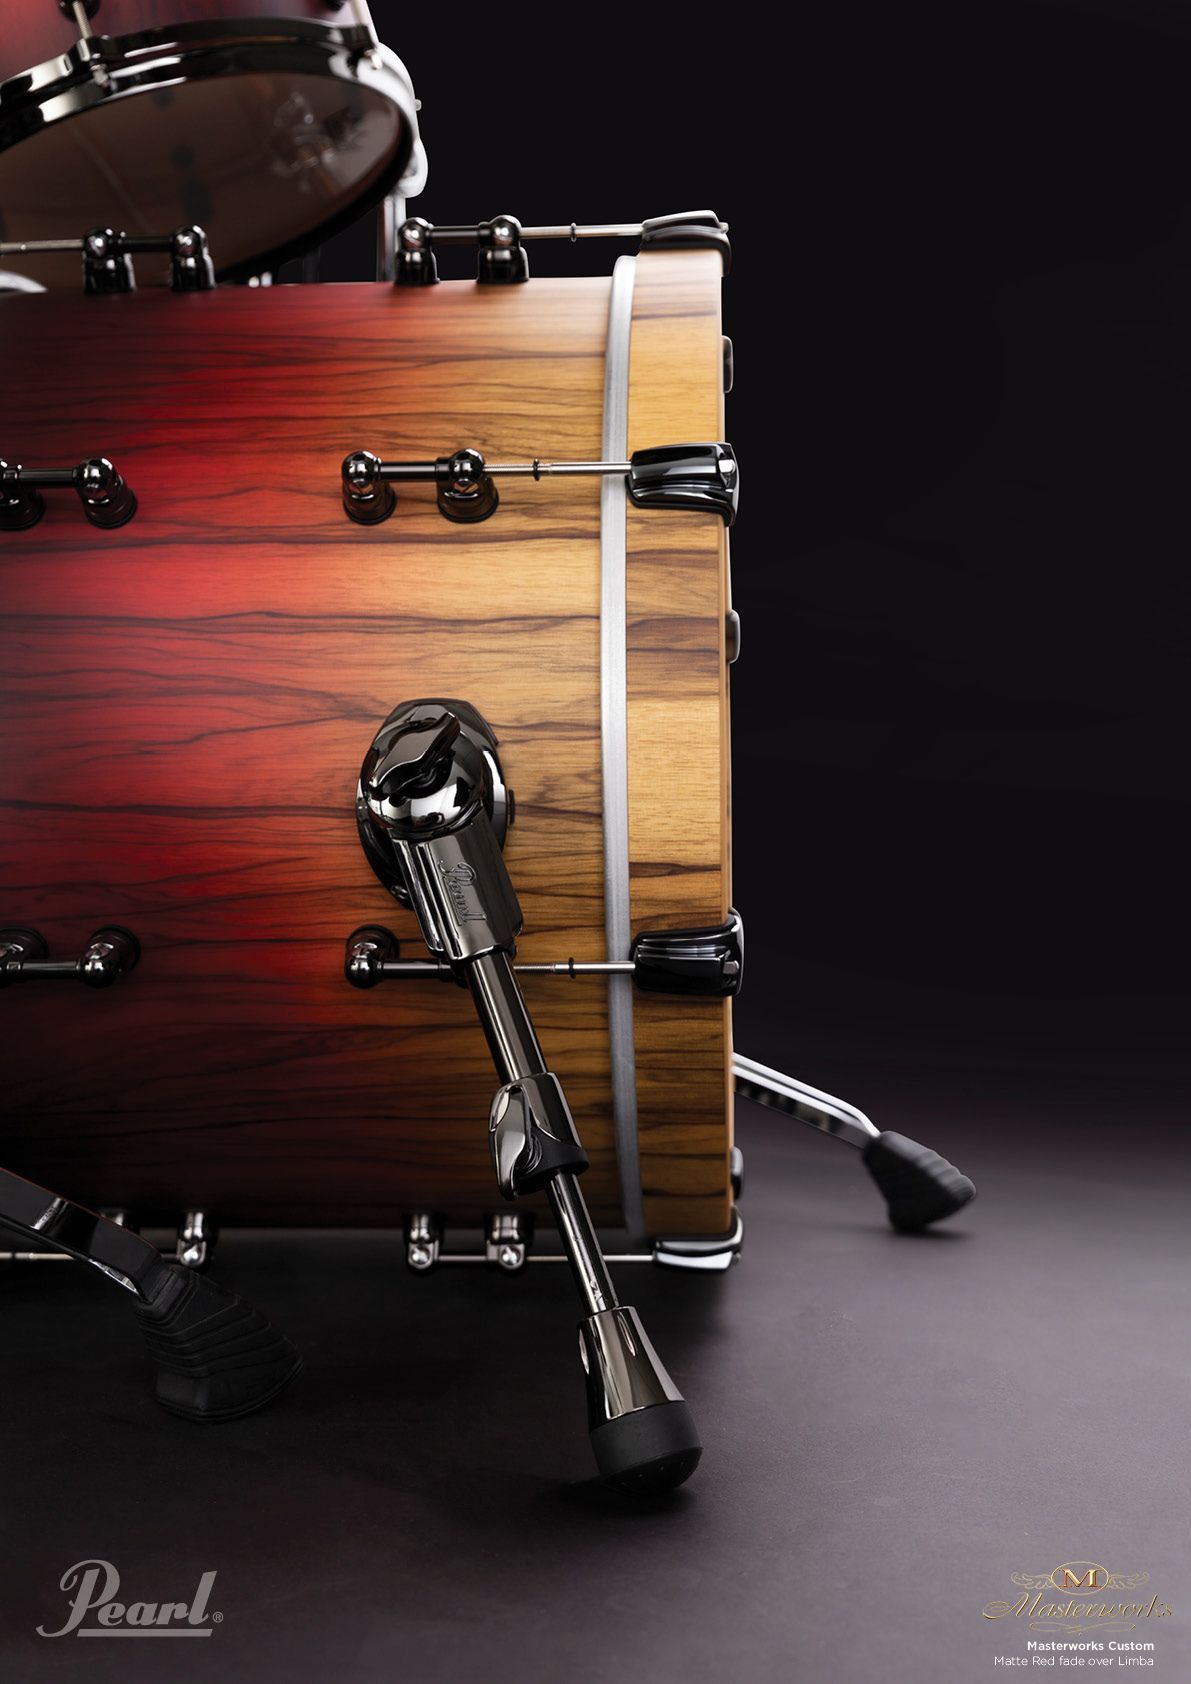 Beautiful Pearl Masterworks bass drum wallpaper. Drums wallpaper, Pearl drums, Drums studio